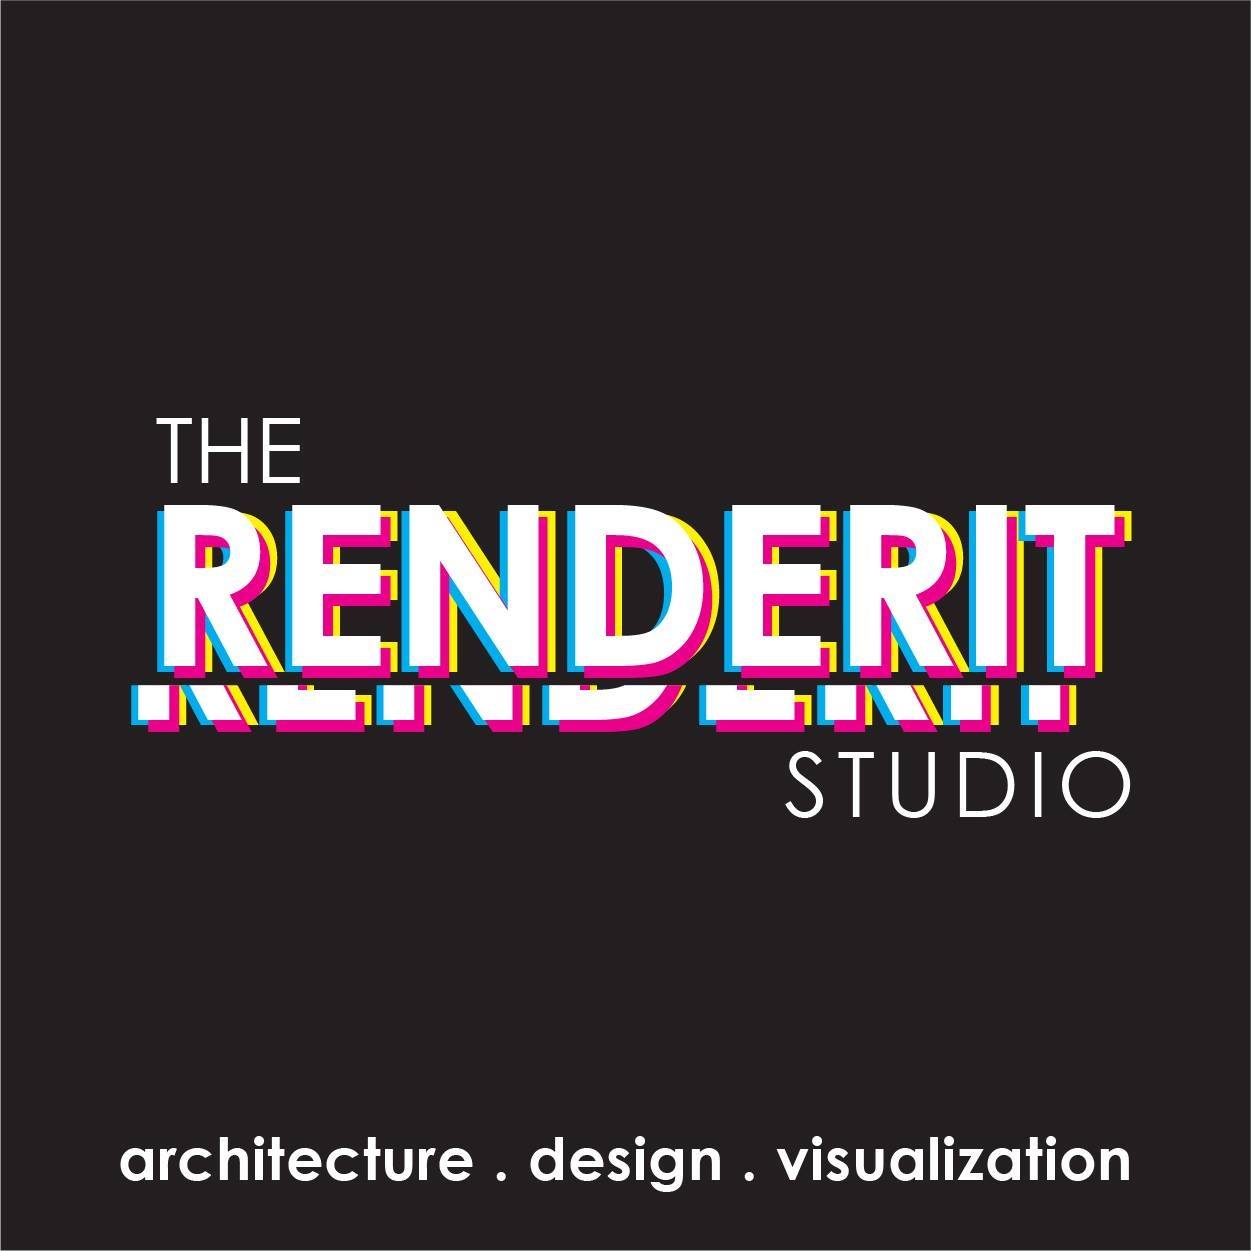 The Renderit Studio|Architect|Professional Services